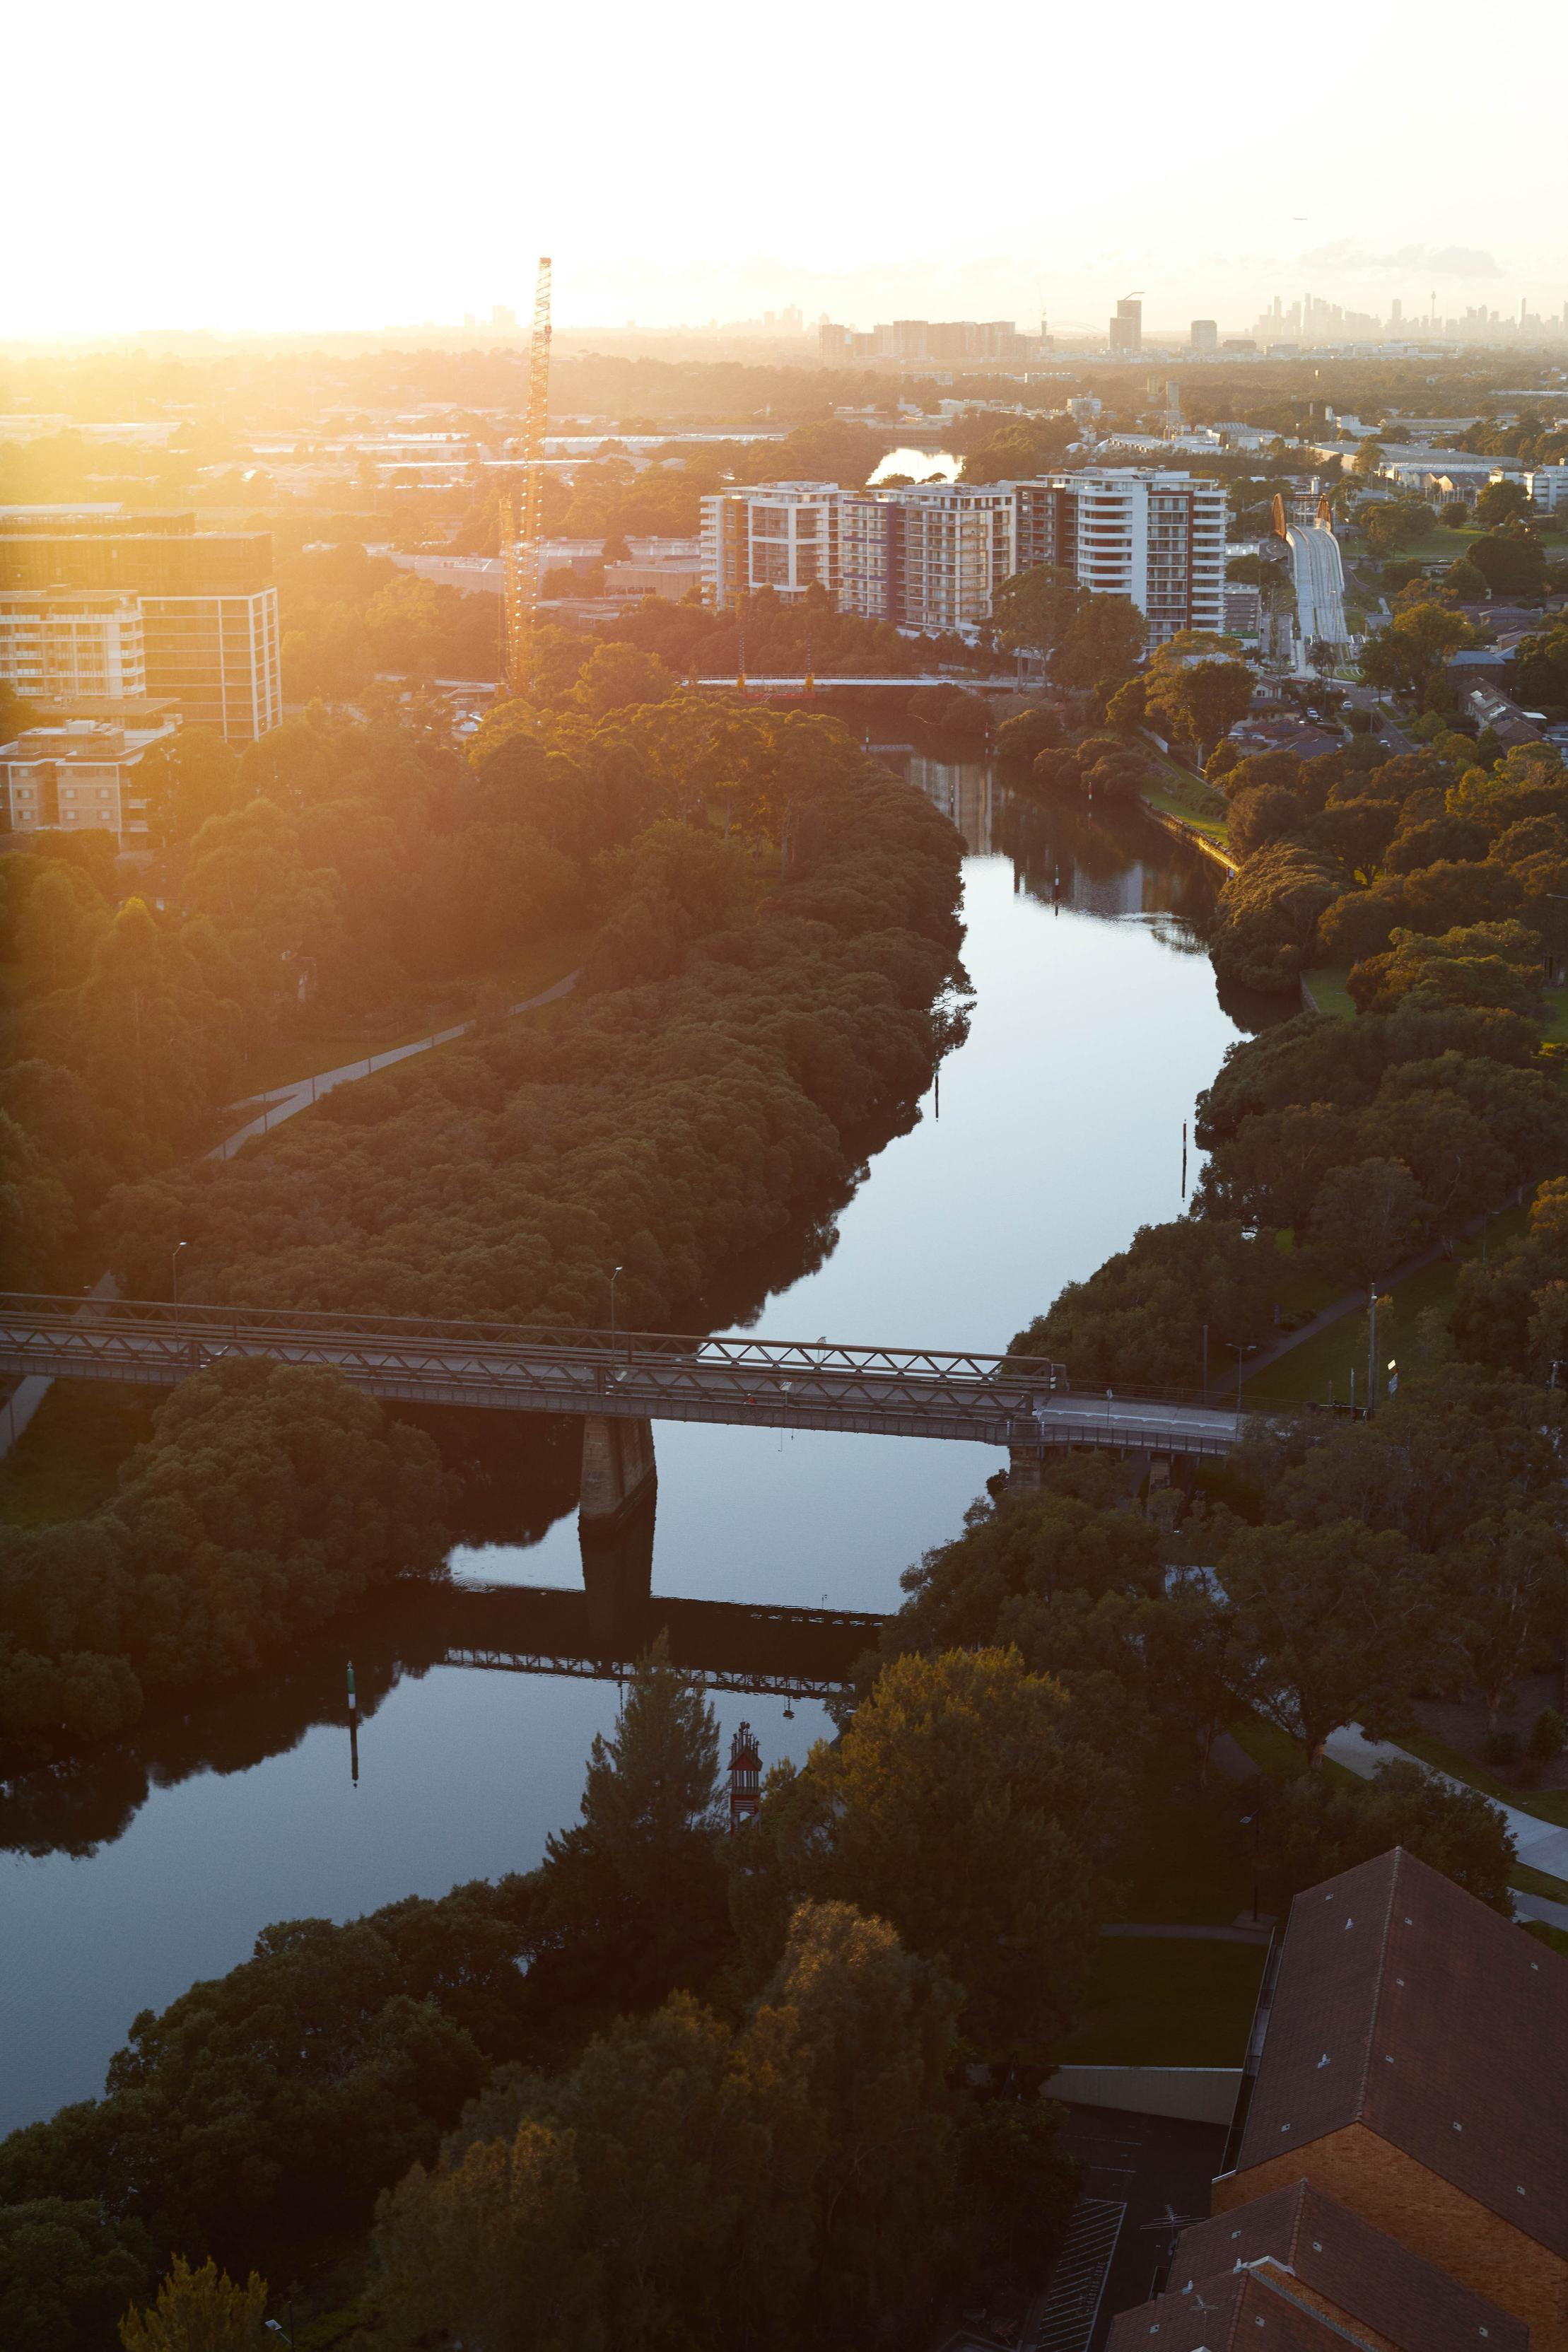 Parramatta river